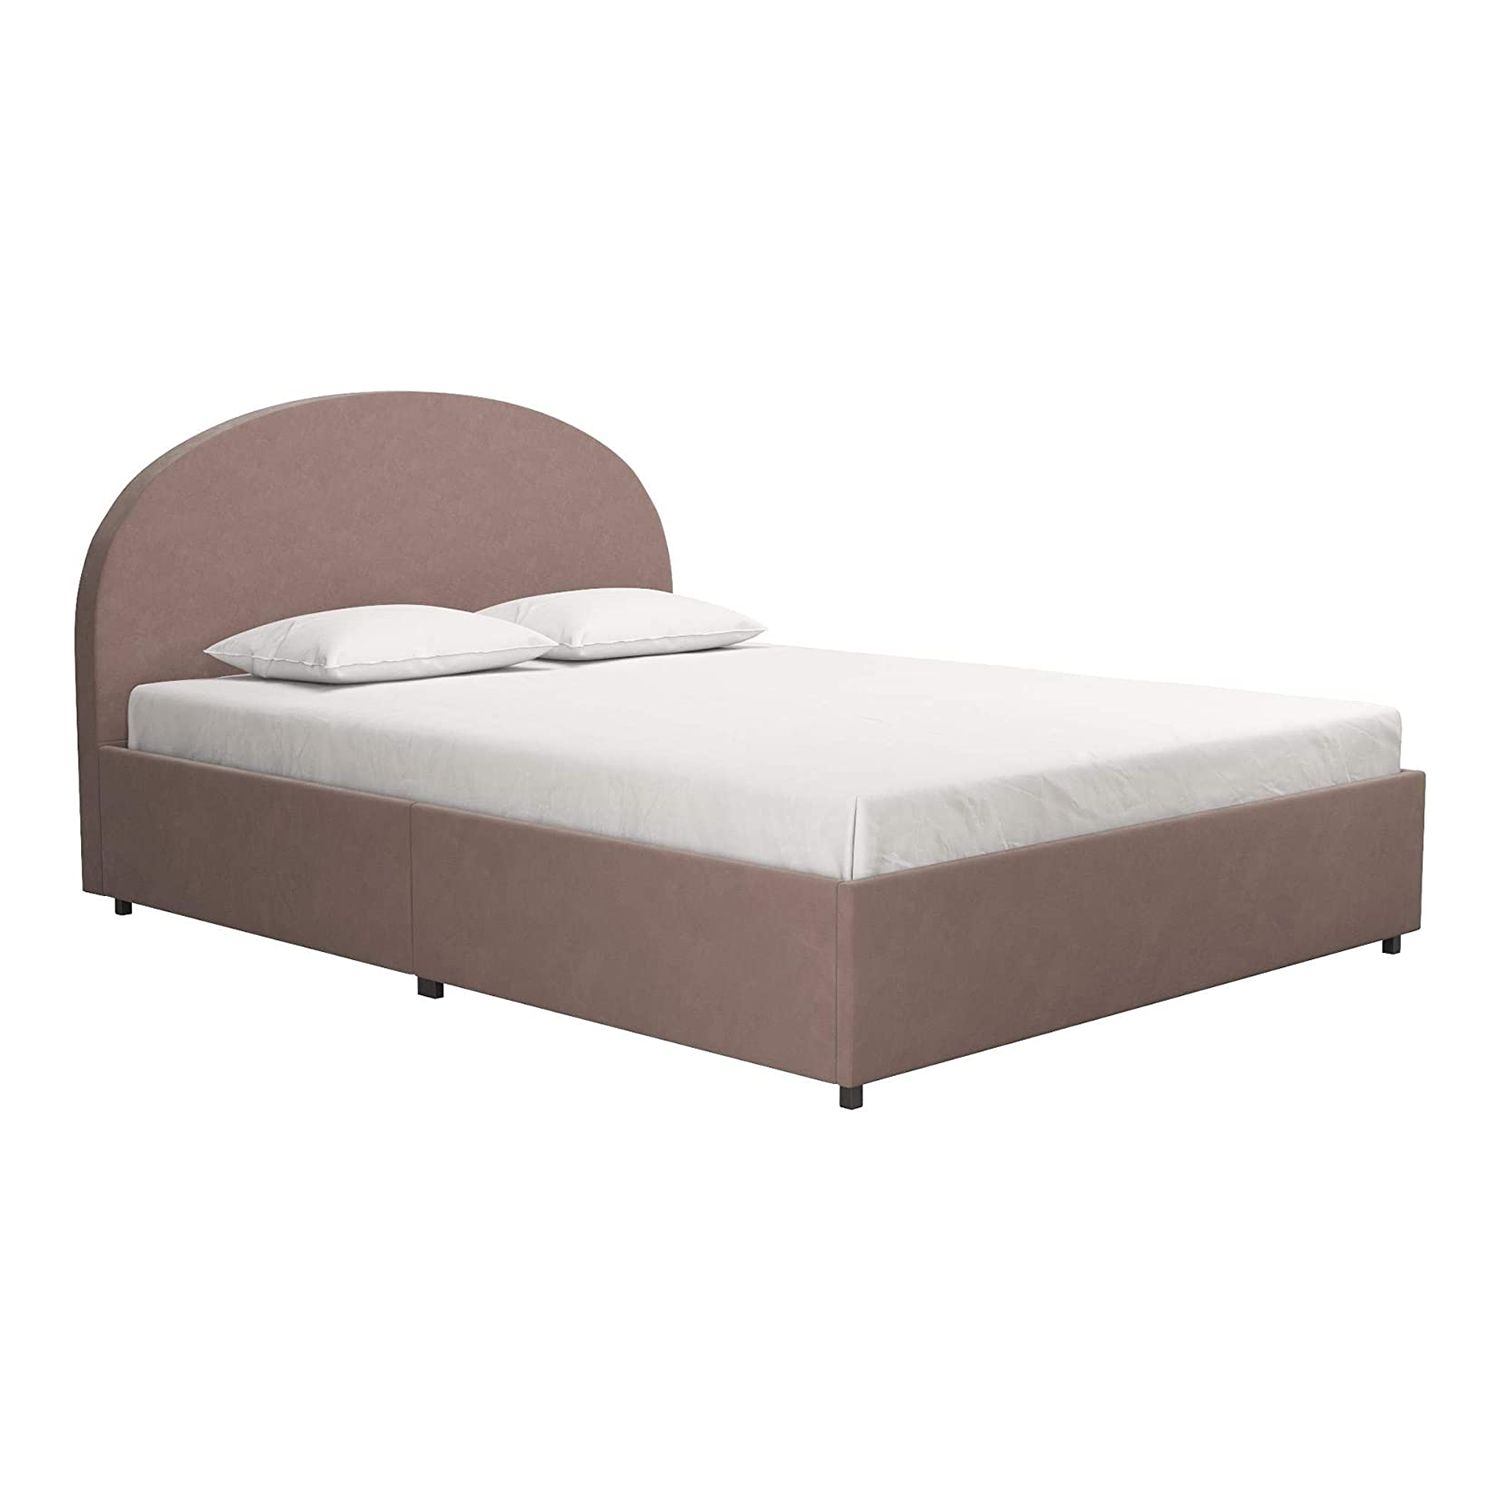 mr kate moon upholstered storage bed